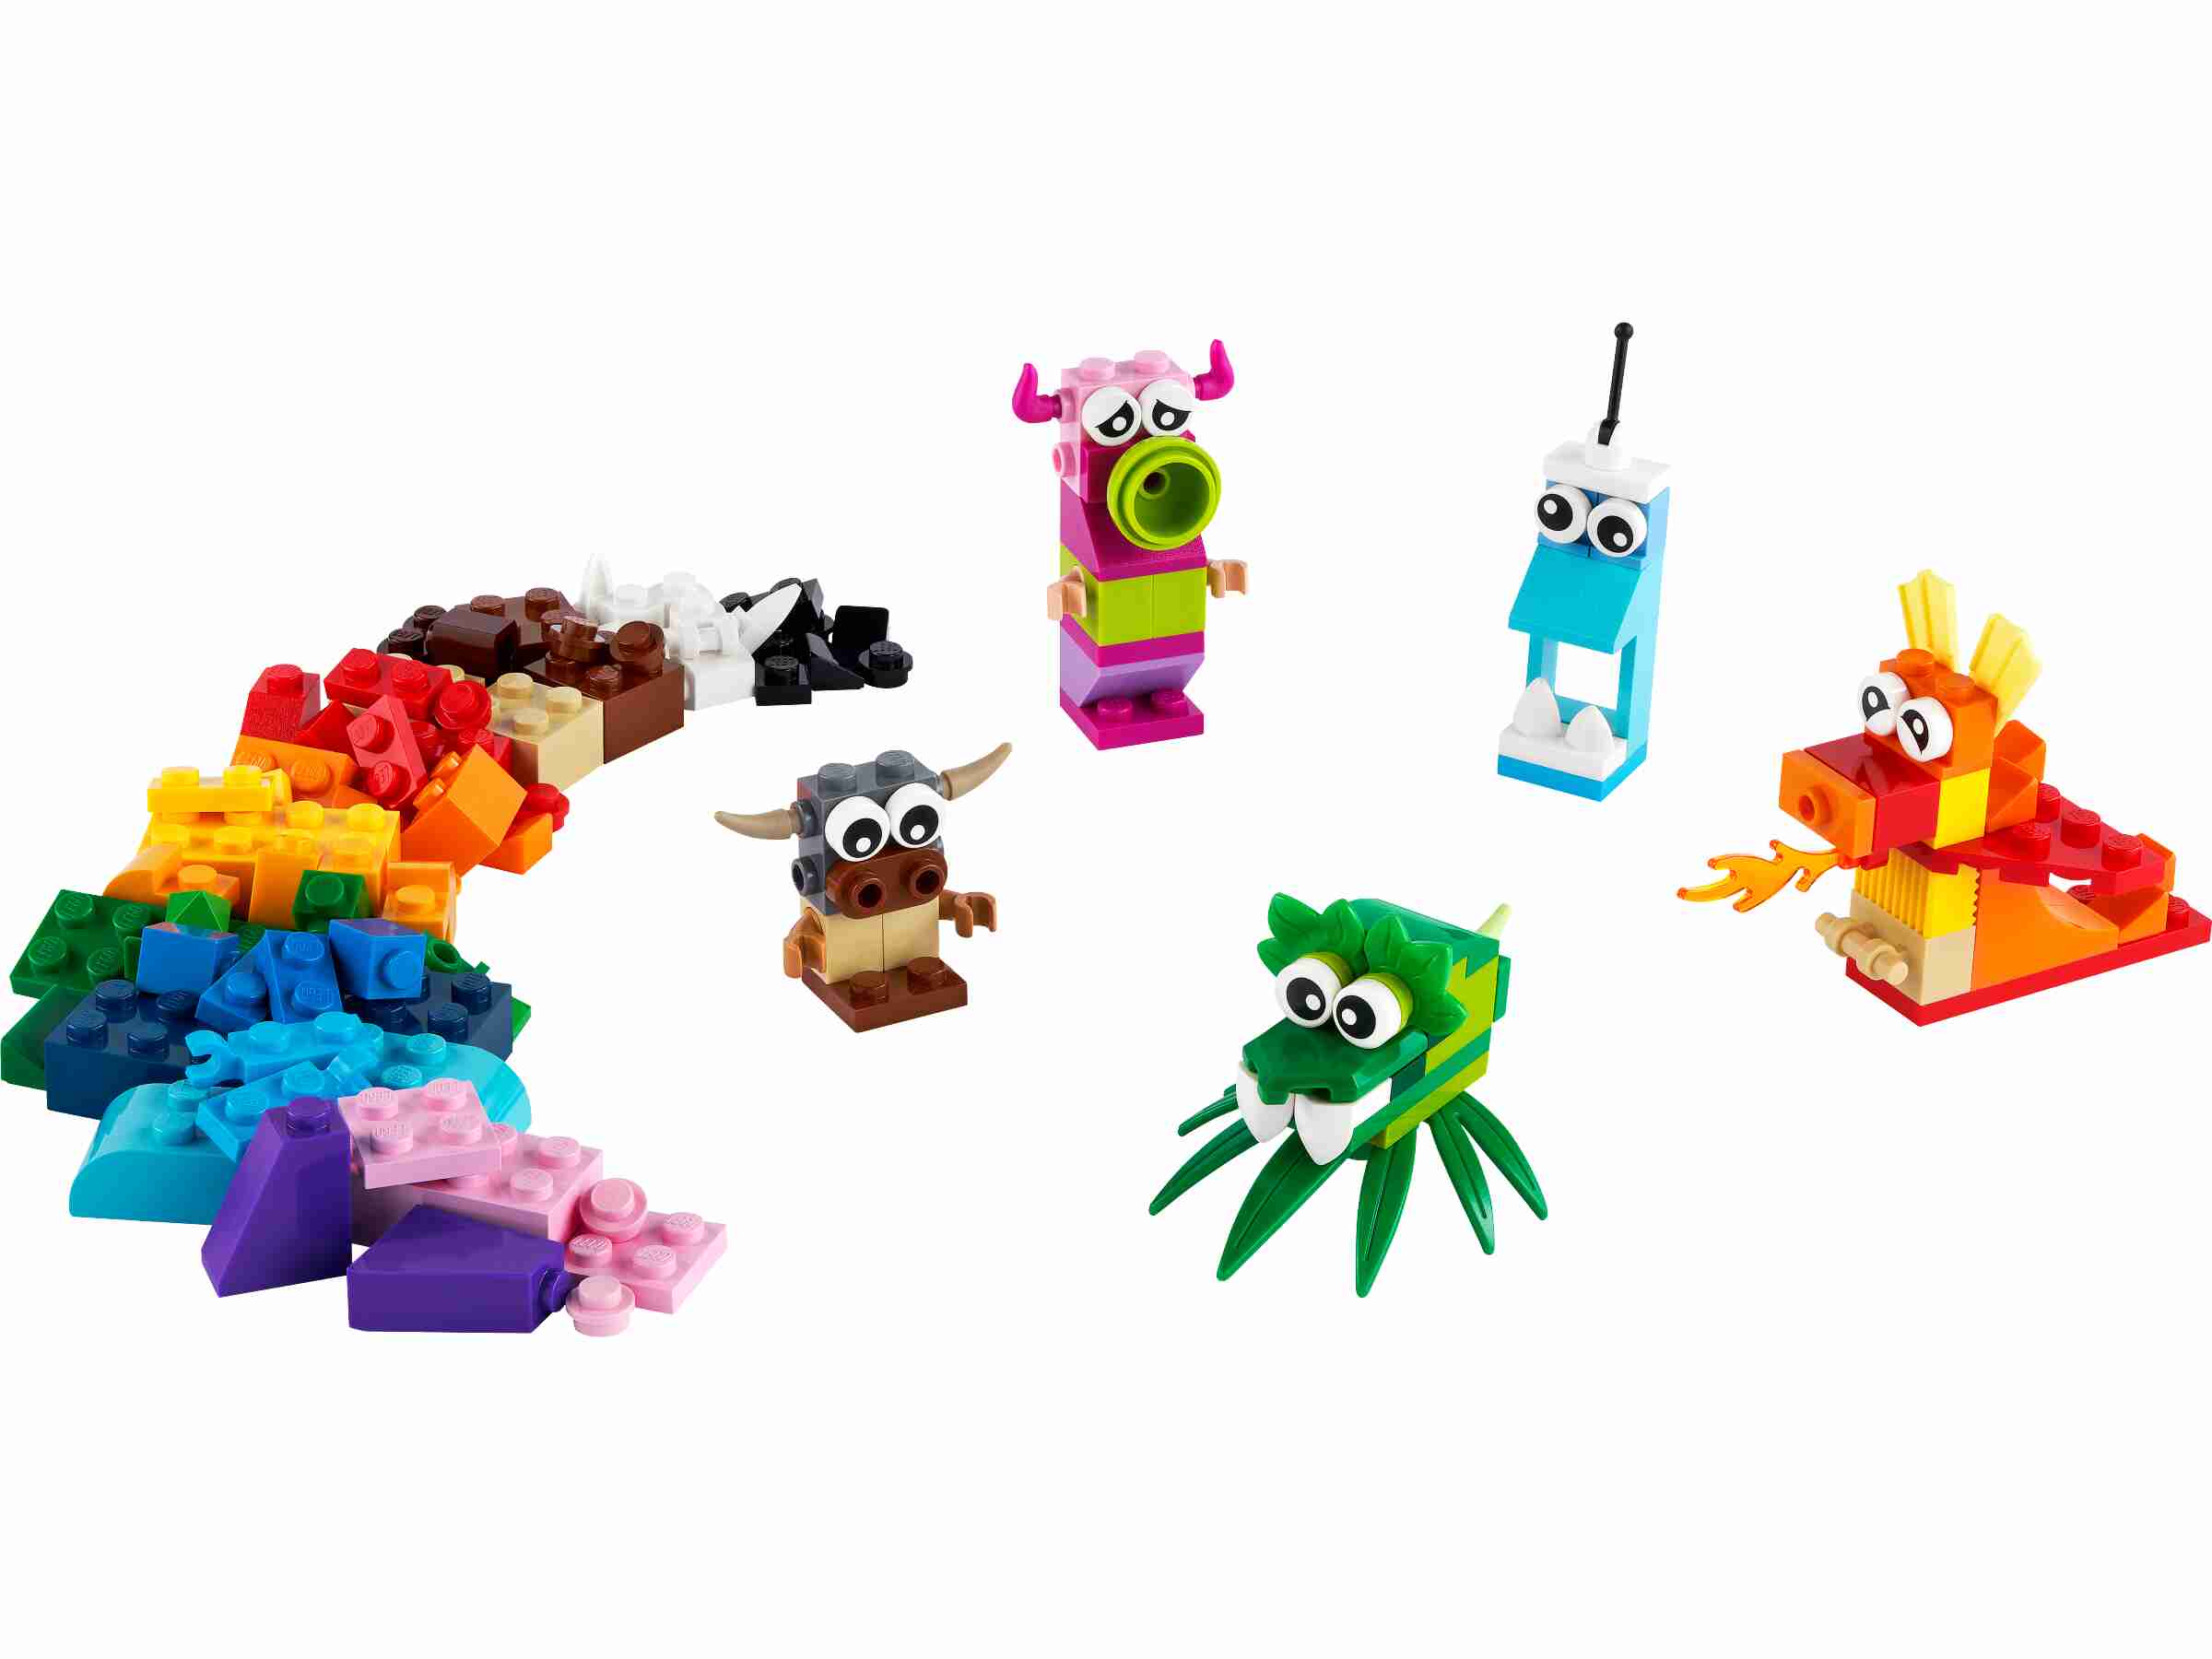 LEGO 11017 Classic Creative Monsters, 5 toy monster build ideas:  Lobigo.co.uk: Toys